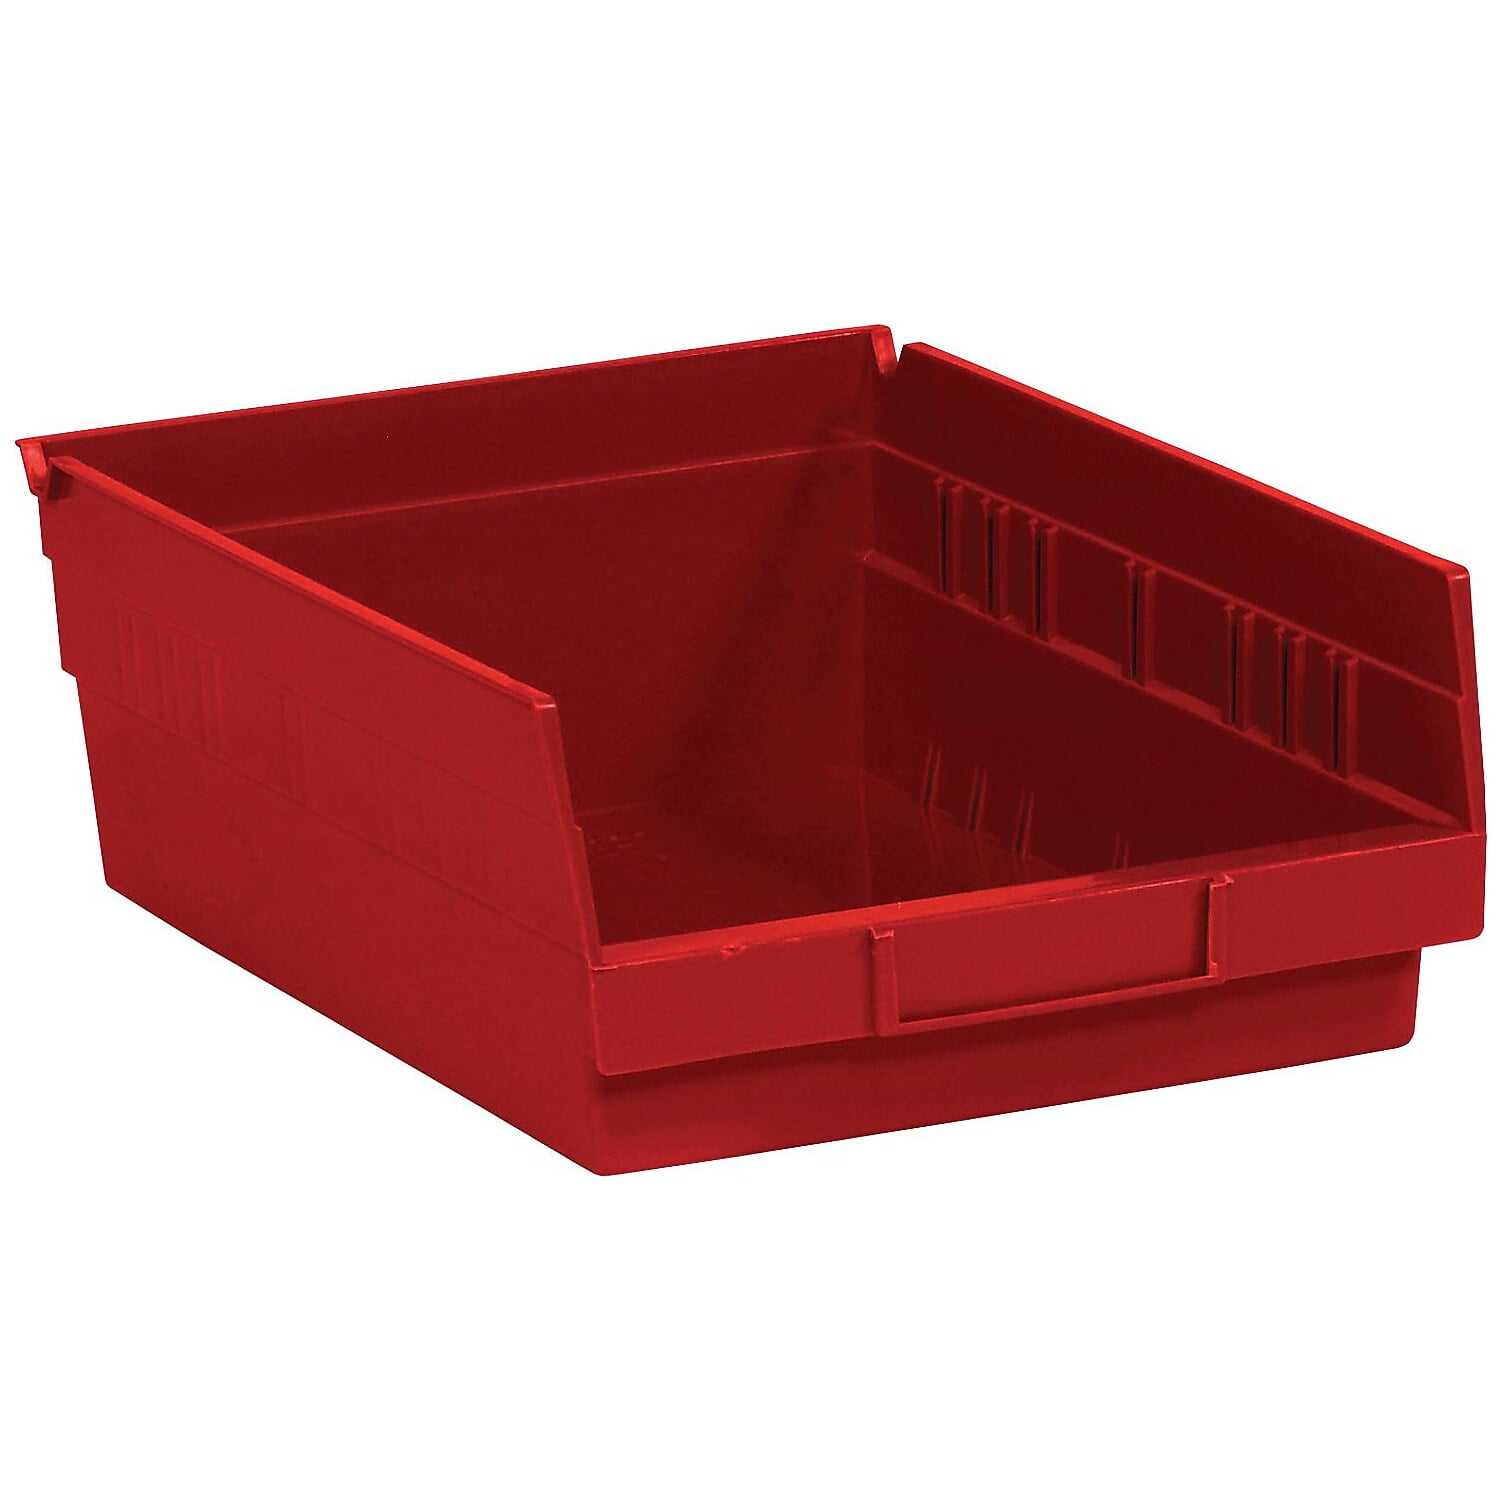 Nestable Shelf Storage Bin Red 6-5/8"W x 11-5/8" D x 4"H Plastic Lot of 12 